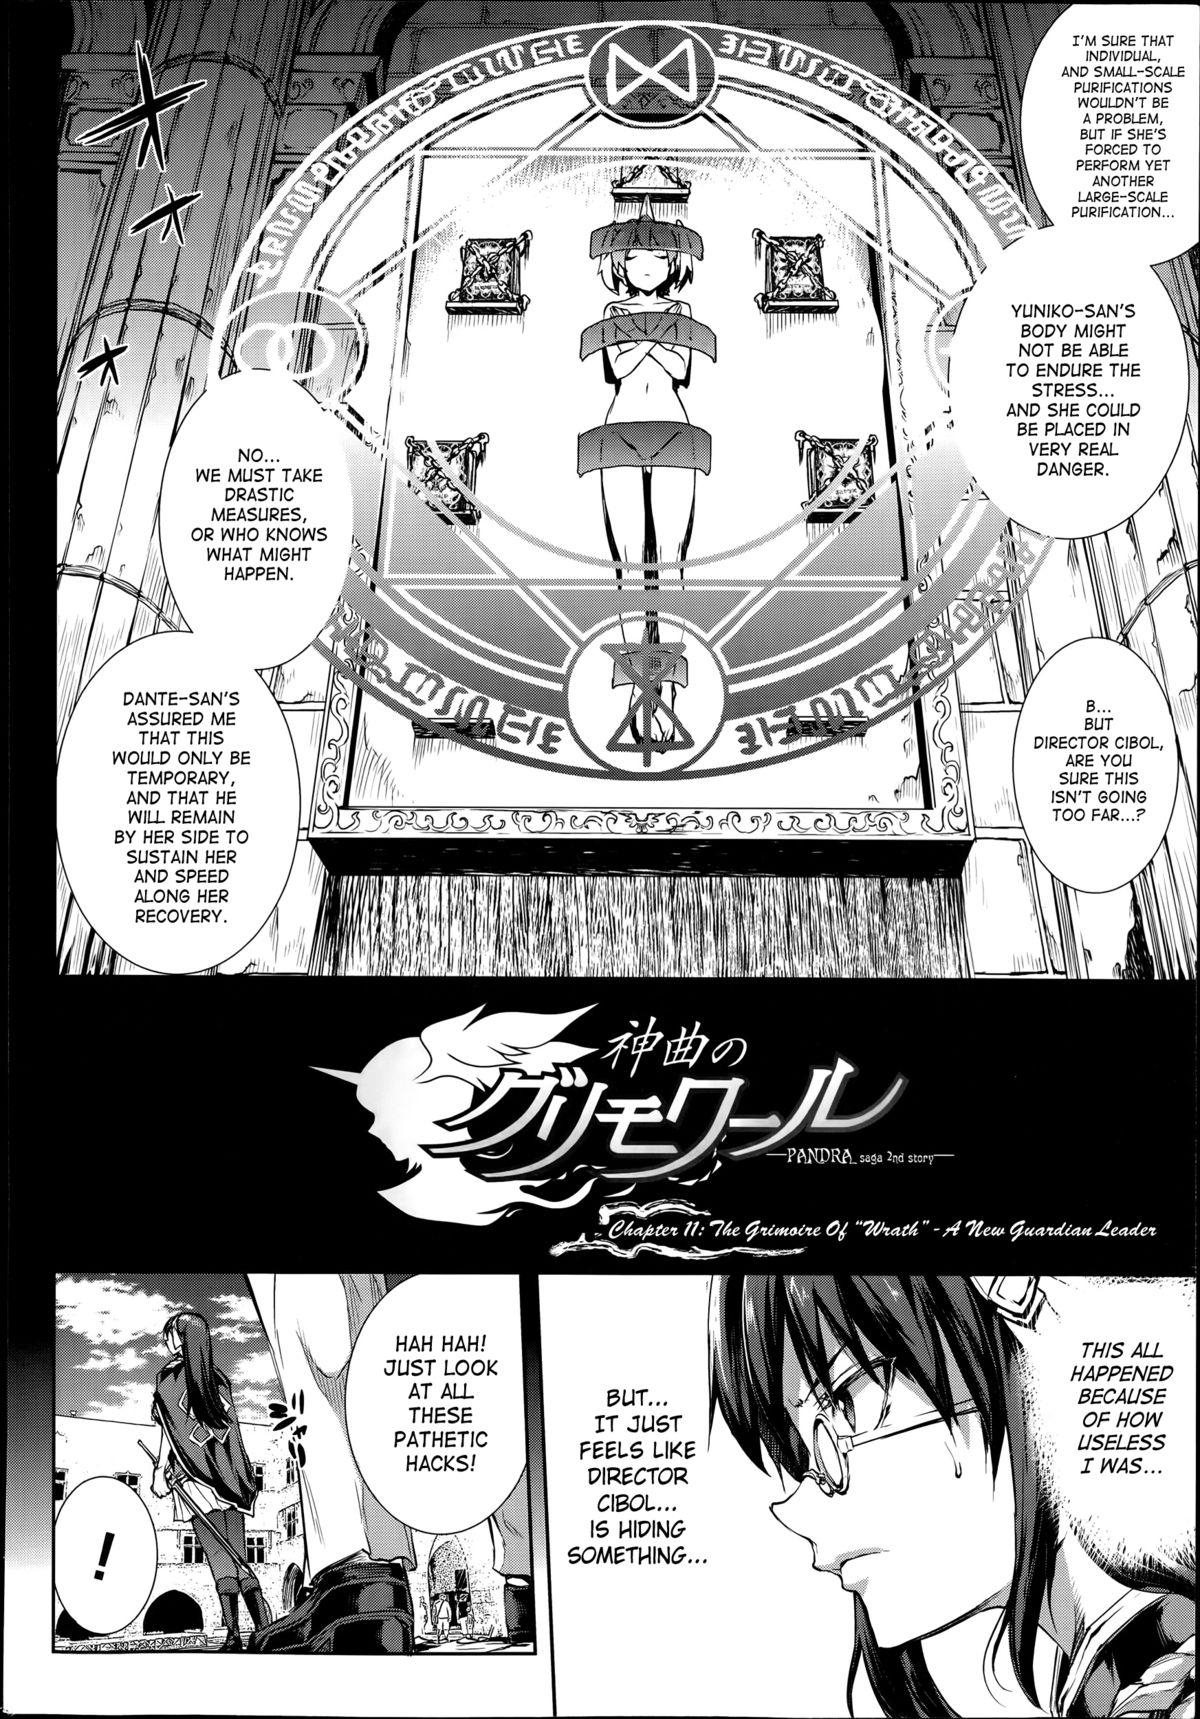 [Erect Sawaru] Shinkyoku no Grimoire -PANDRA saga 2nd story- Ch. 1-15 + Side Story x 3 [English] [SaHa] 332